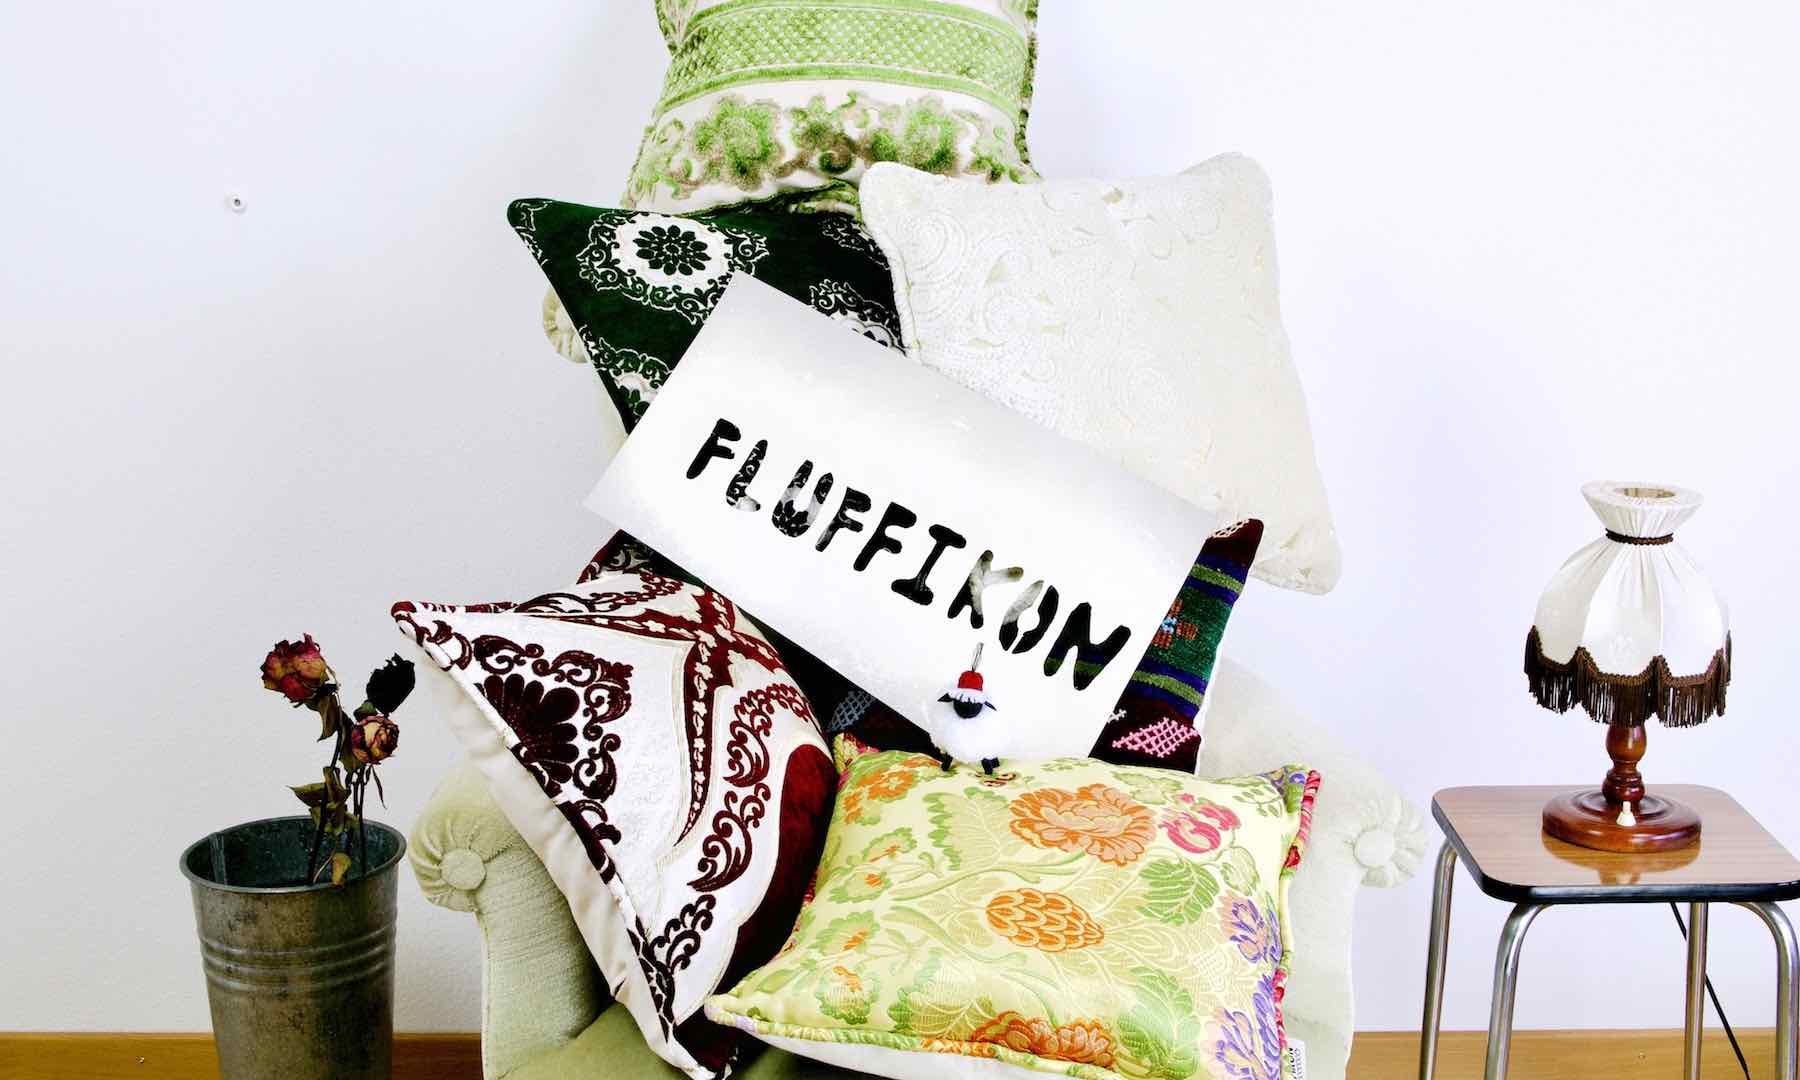 Multiple Fluffikon Moroccan pillows on a green velvet chair.